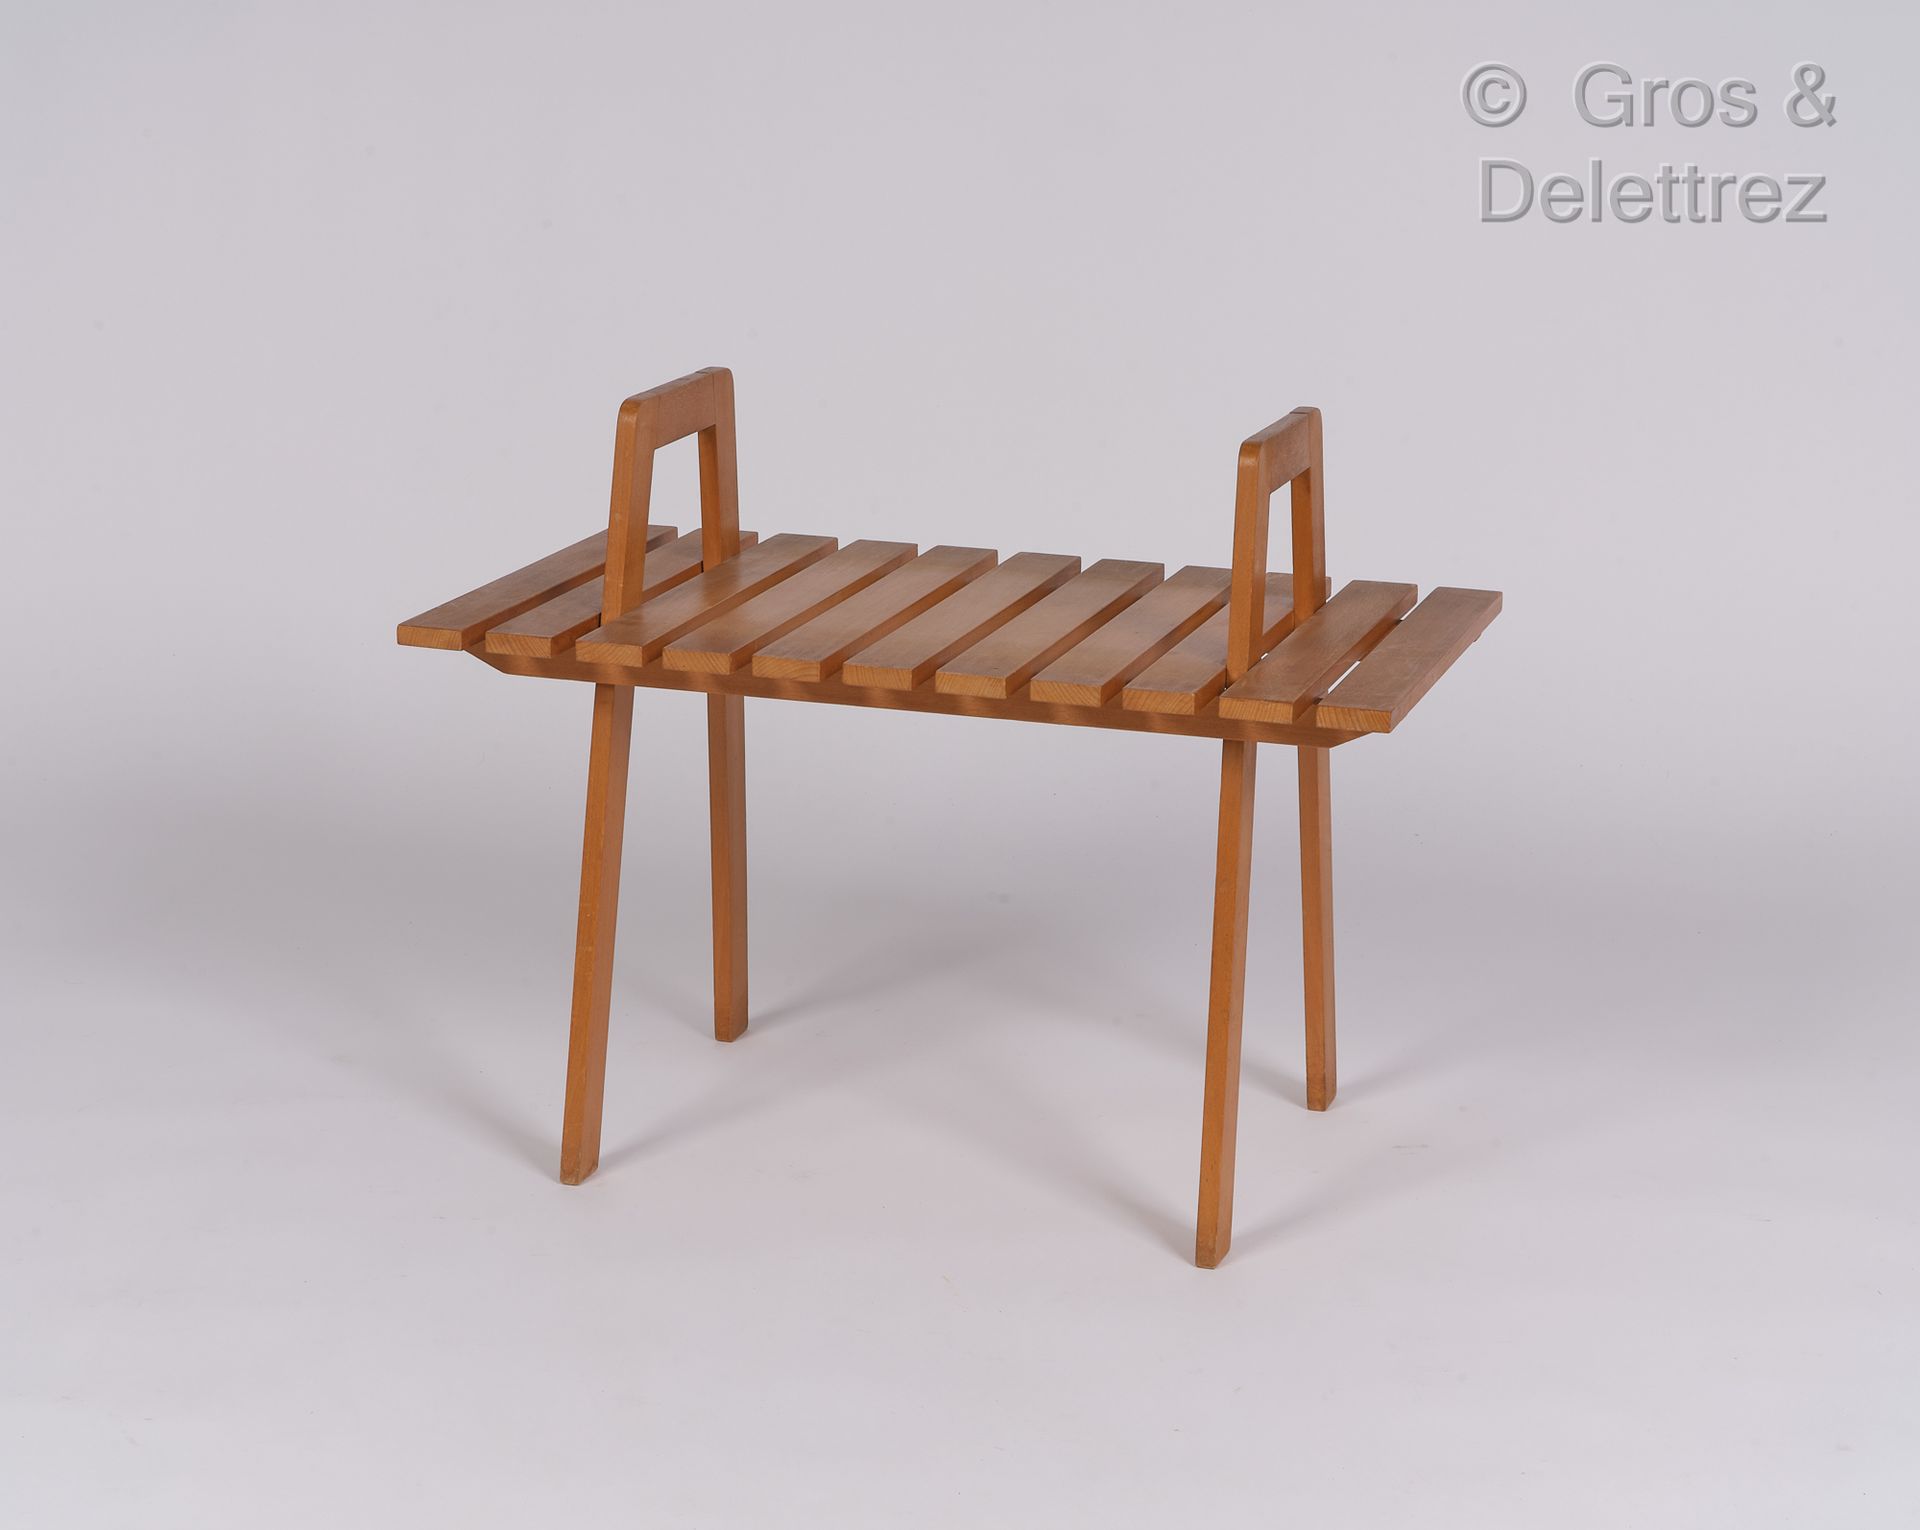 Null Lavoro francese

Tavolino in legno biondo

H: 60 cm, L: 70 cm, P: 40 cm